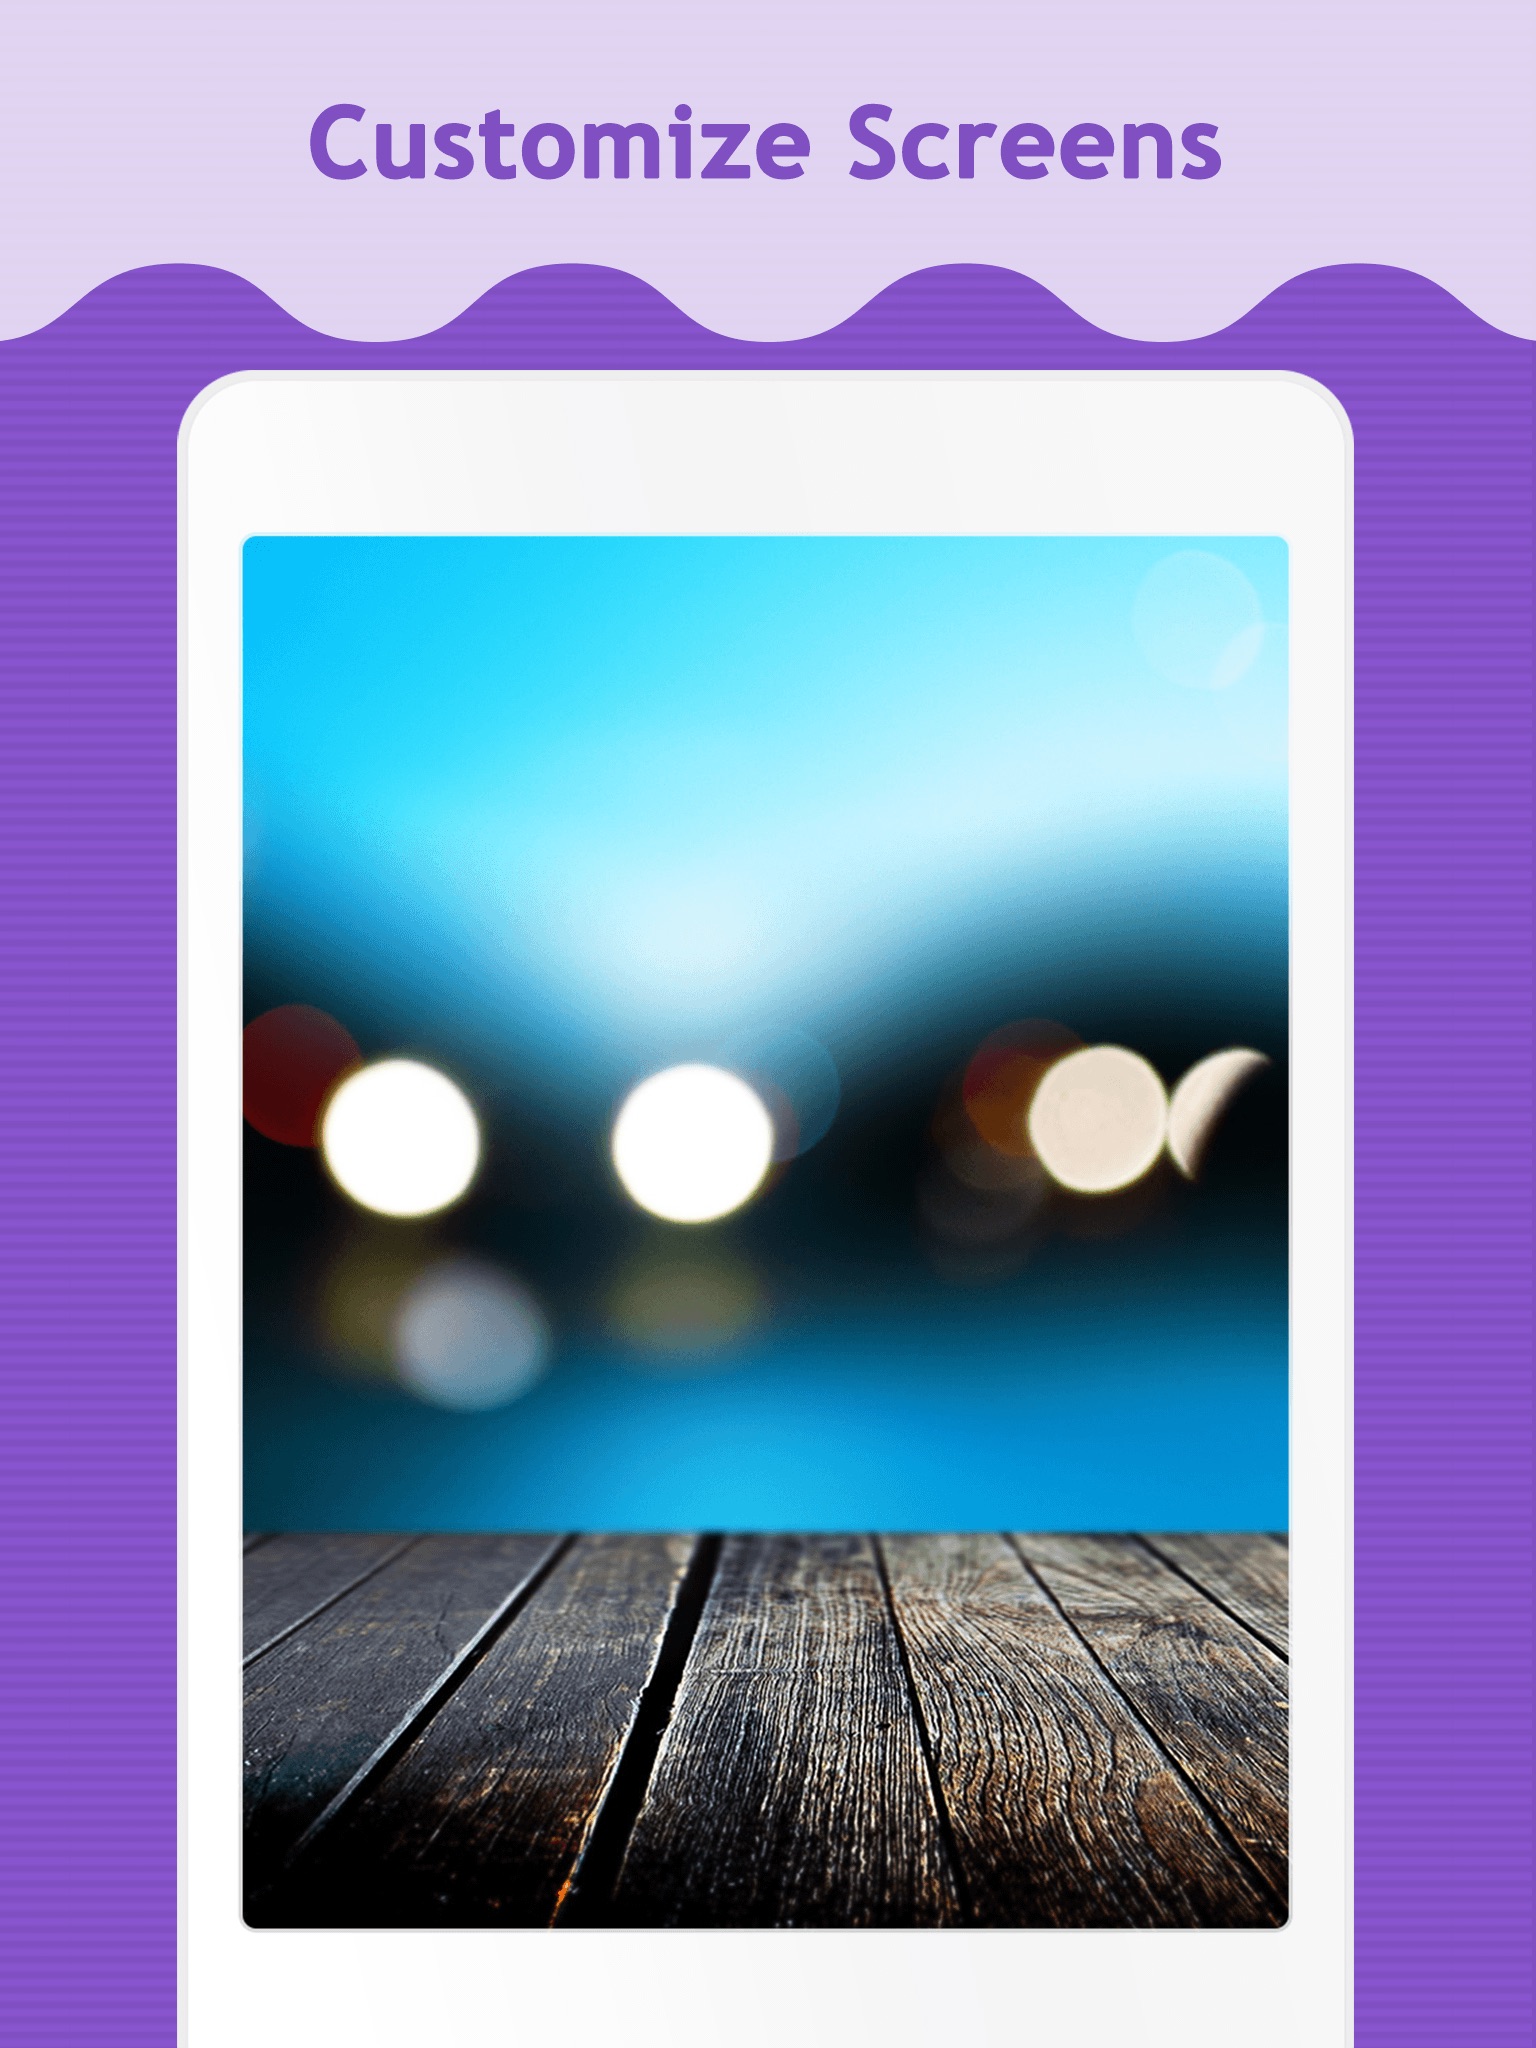 HD Wallpapers for iPad screenshot 3